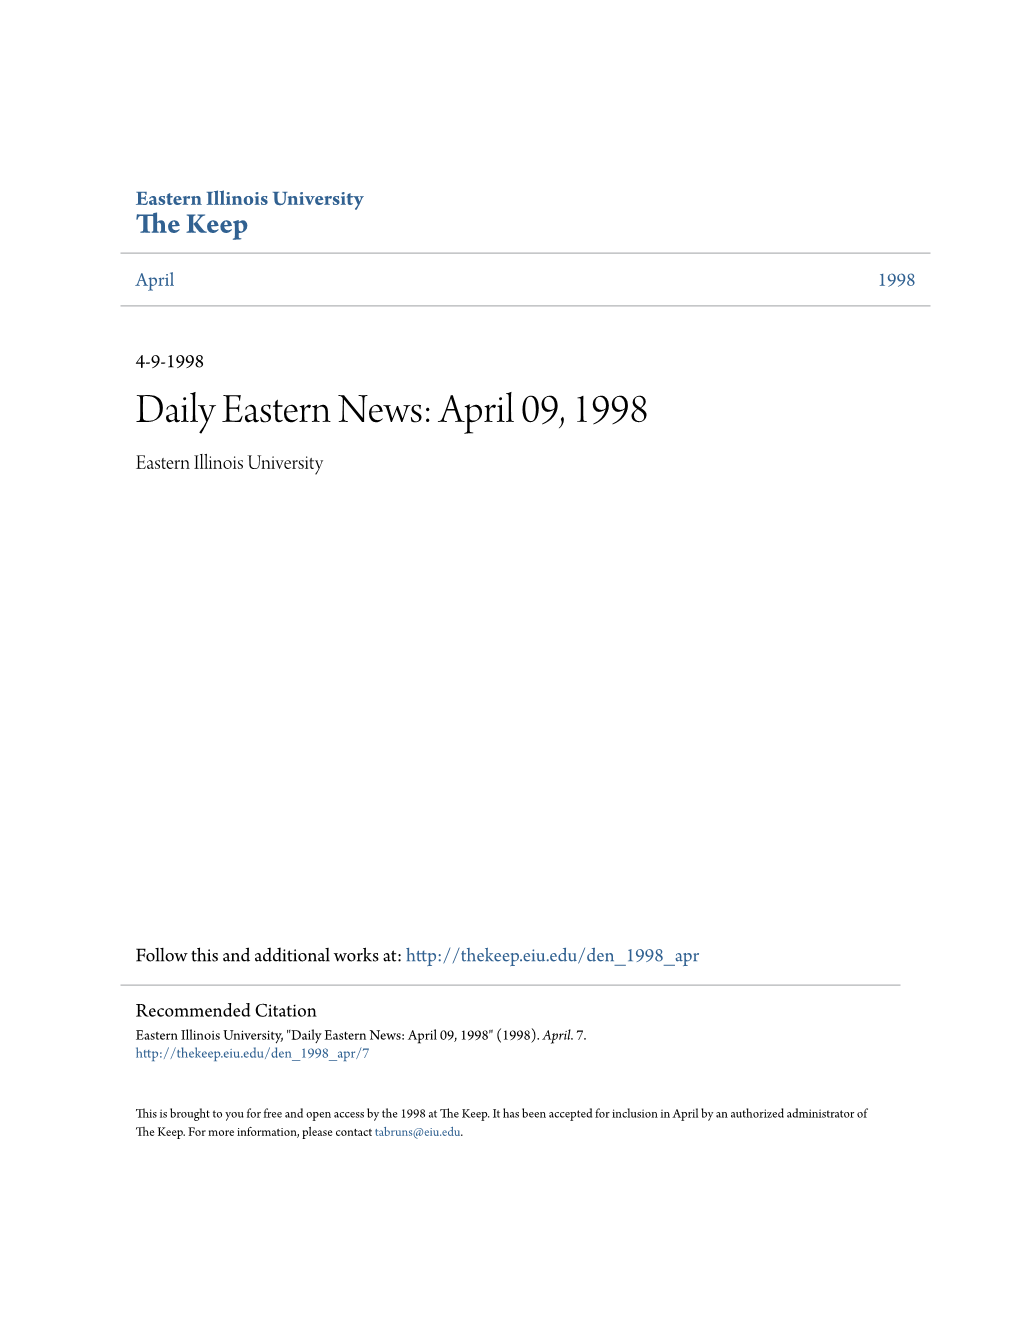 Daily Eastern News: April 09, 1998 Eastern Illinois University